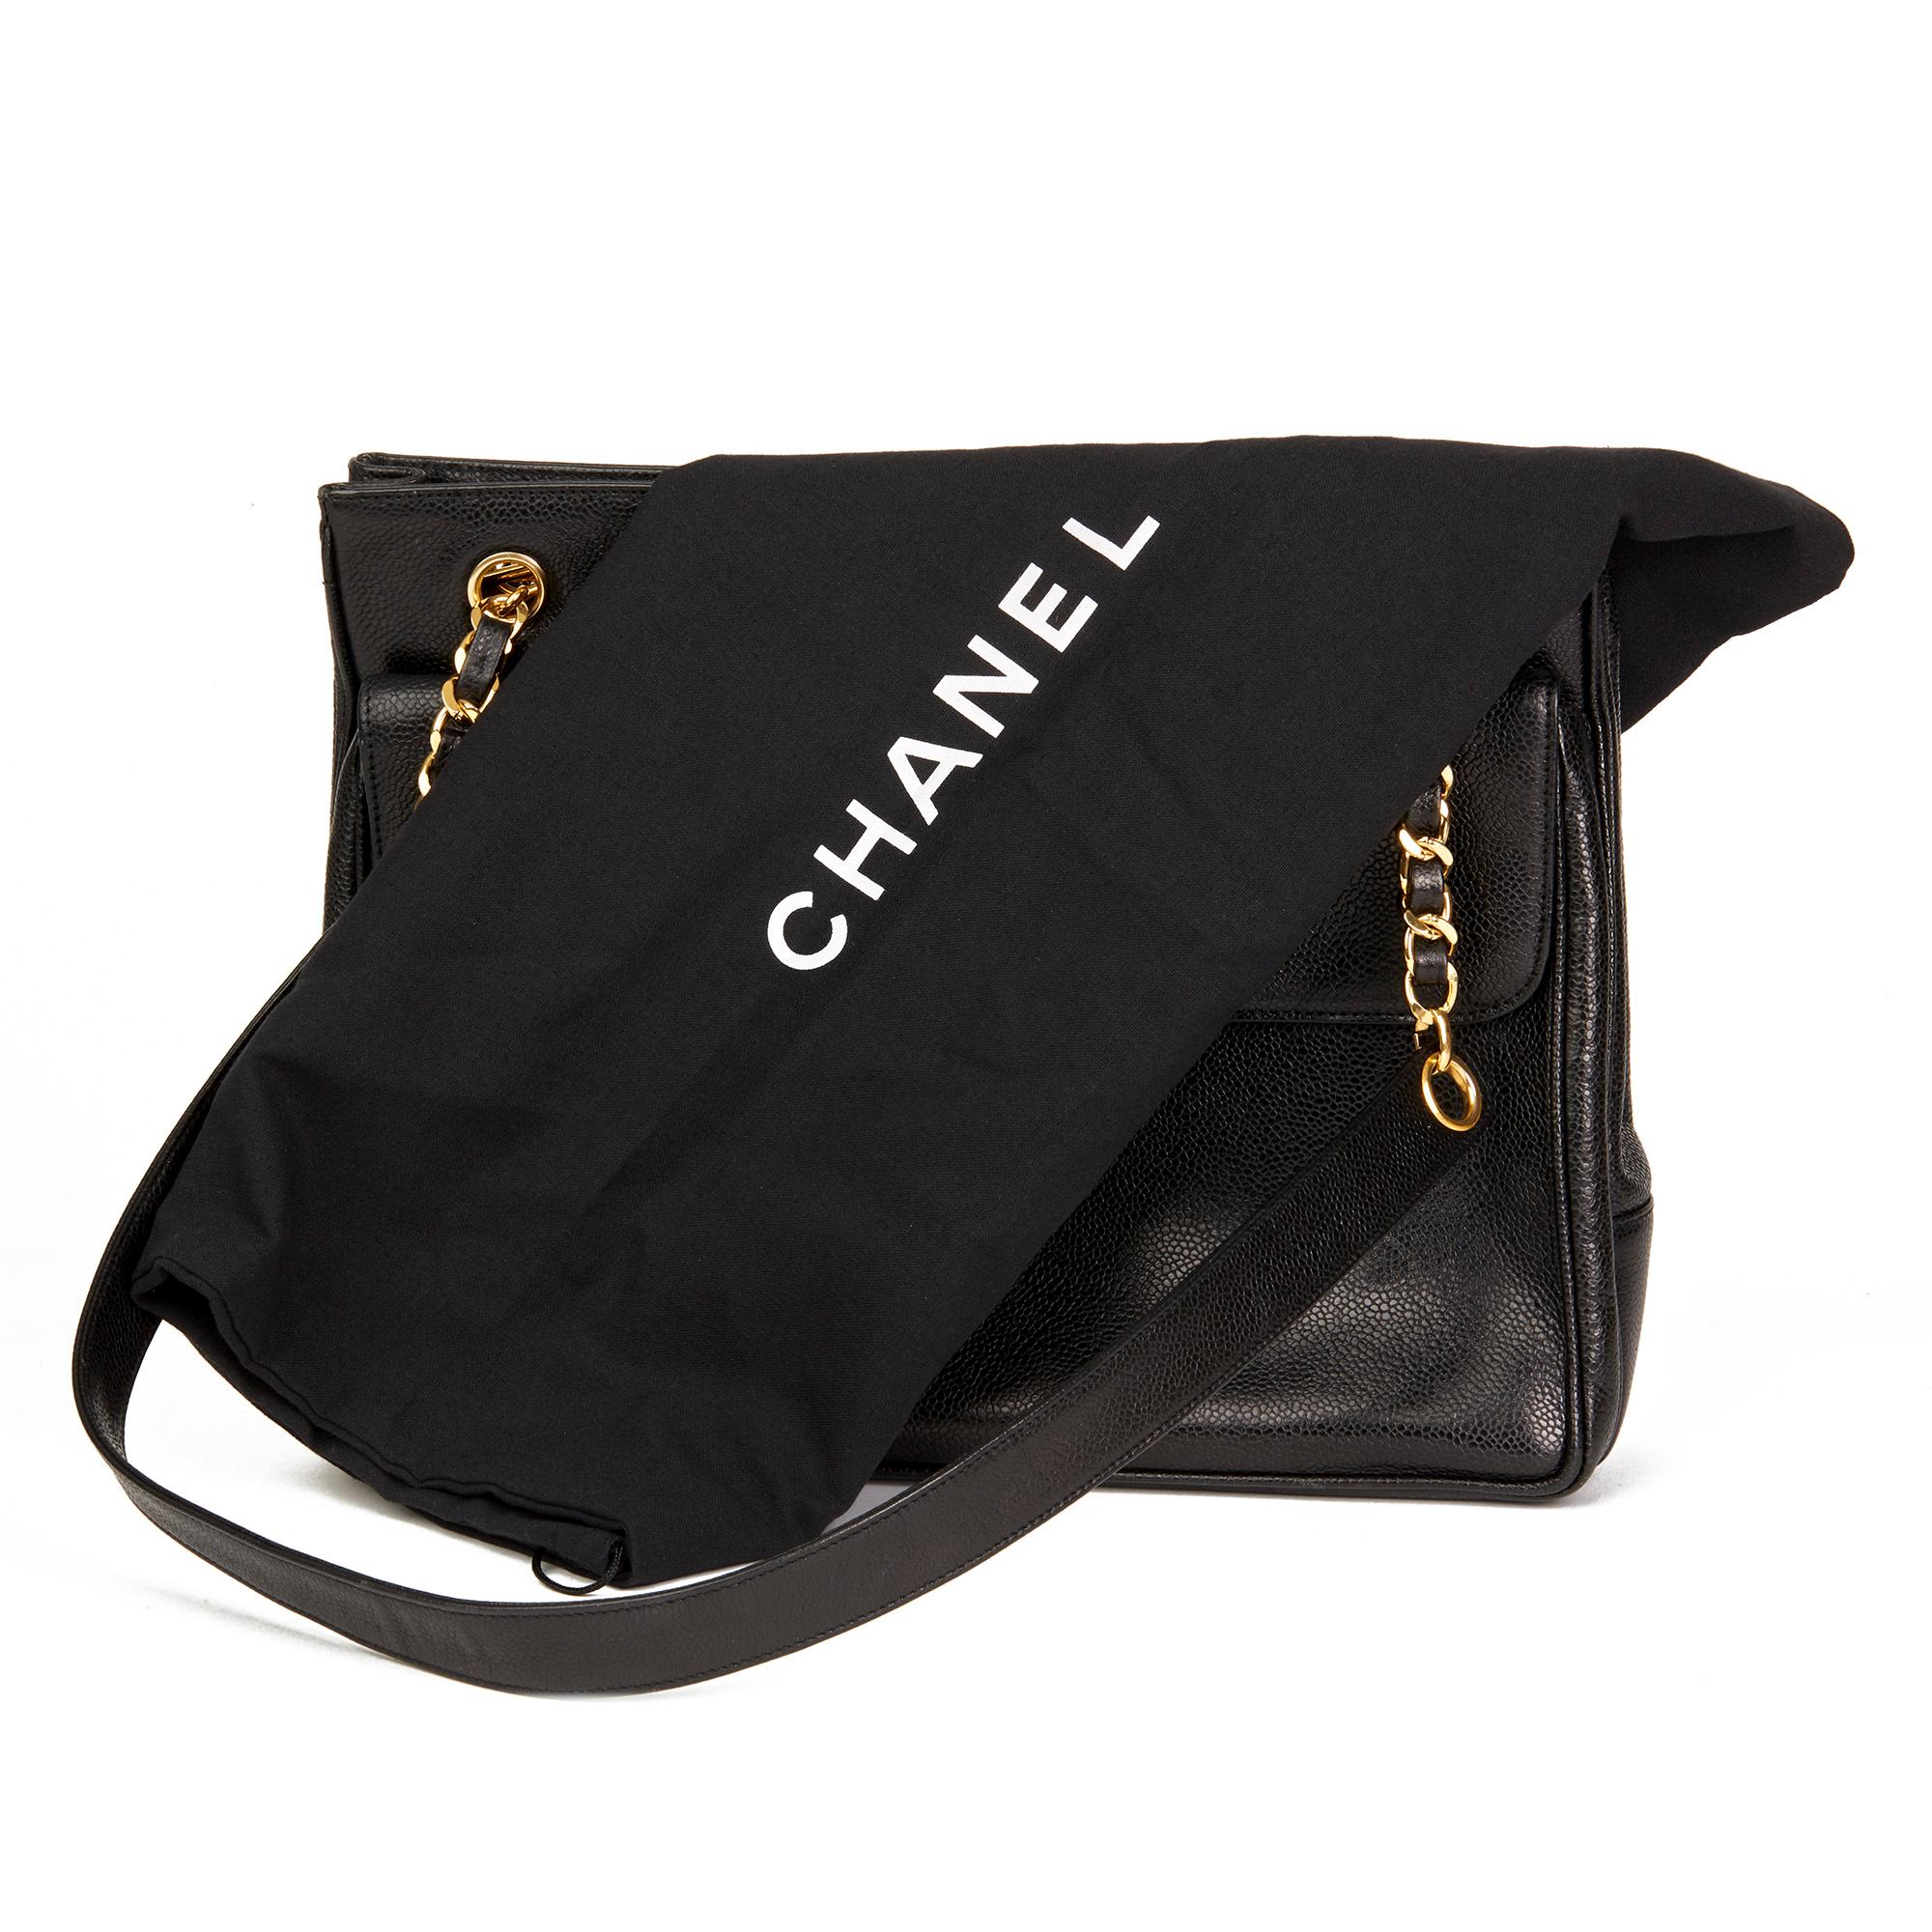 1991 Chanel Black Caviar Leather Vintage Classic Shoulder Bag 7